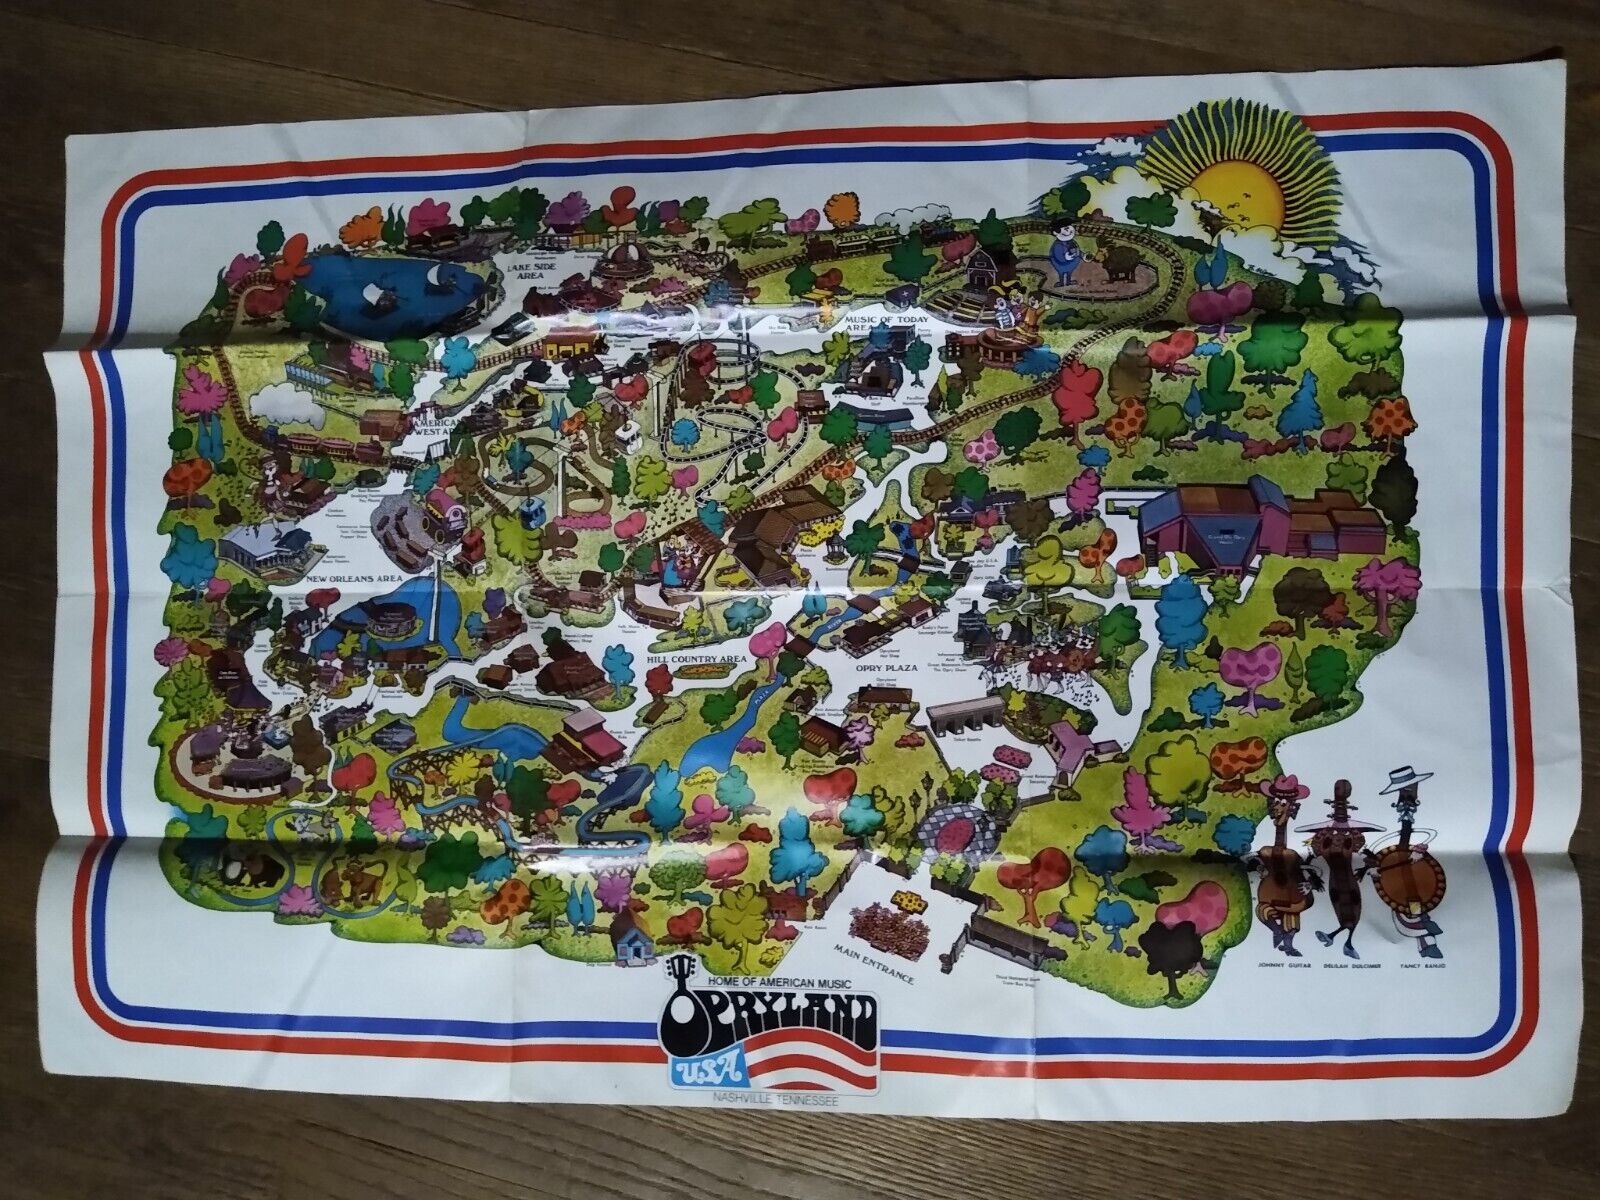 Rare 1973 Opryland Theme Park Souvenir Map